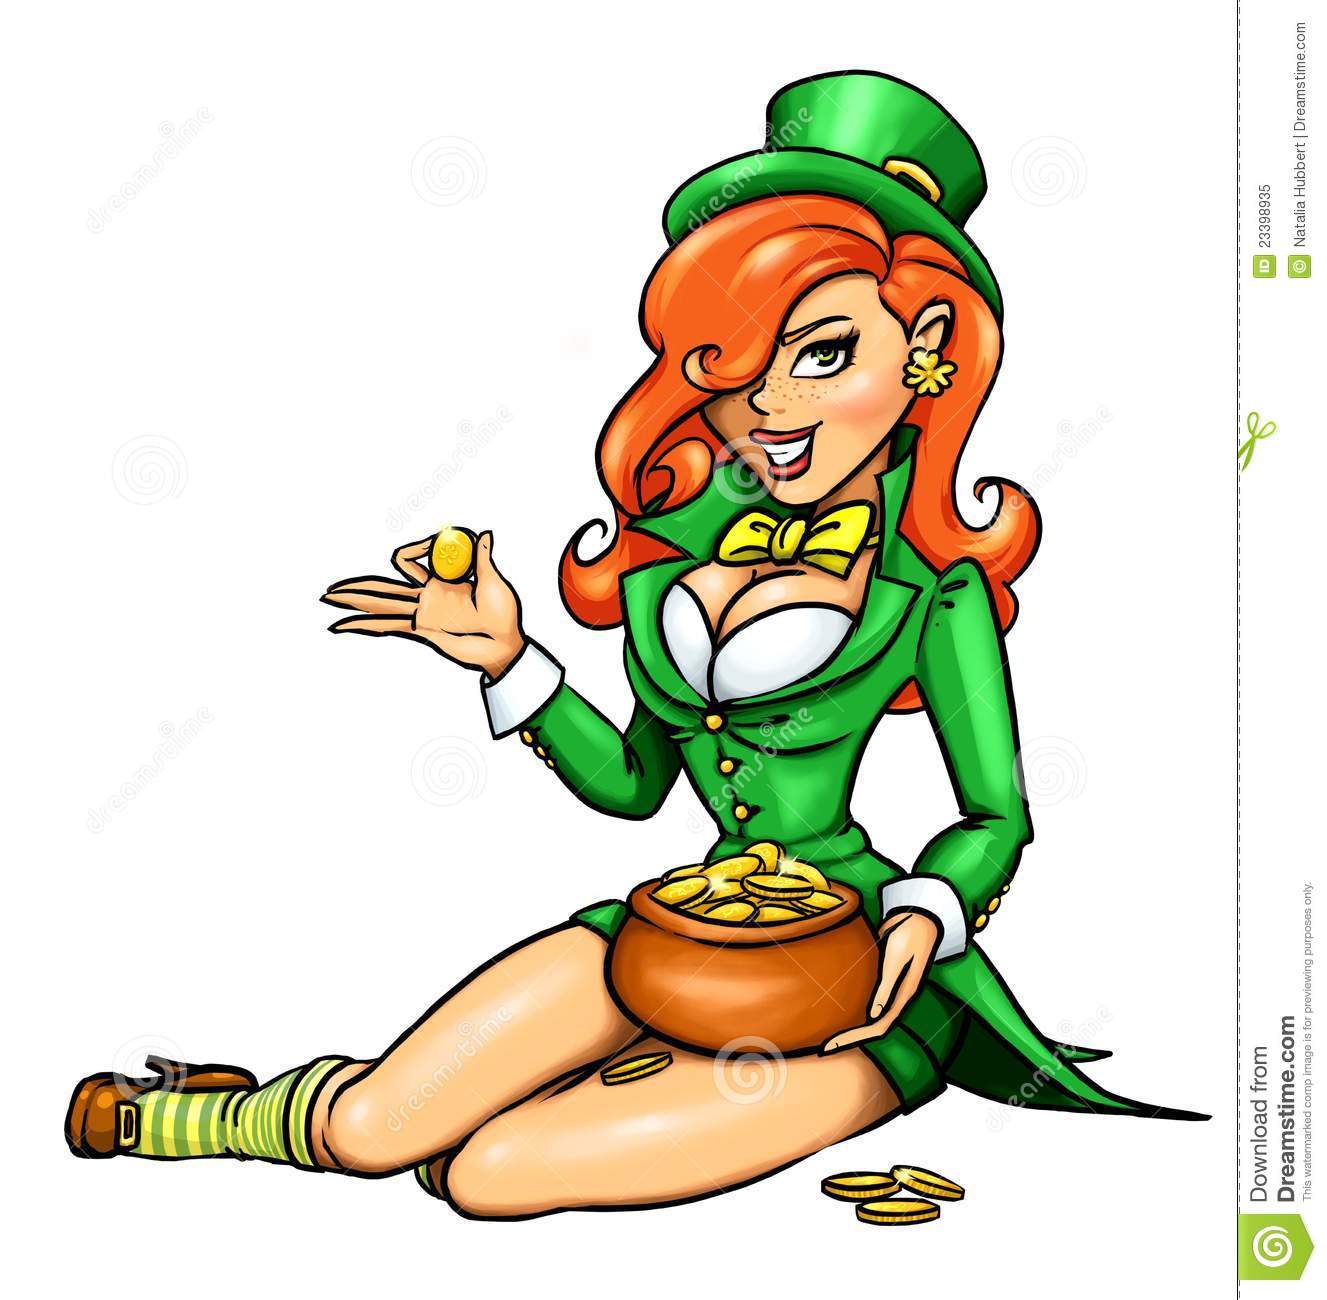 Leprechaun girl, st. Patricku0026#39;s day girl, coins Royalty Free Stock Photo